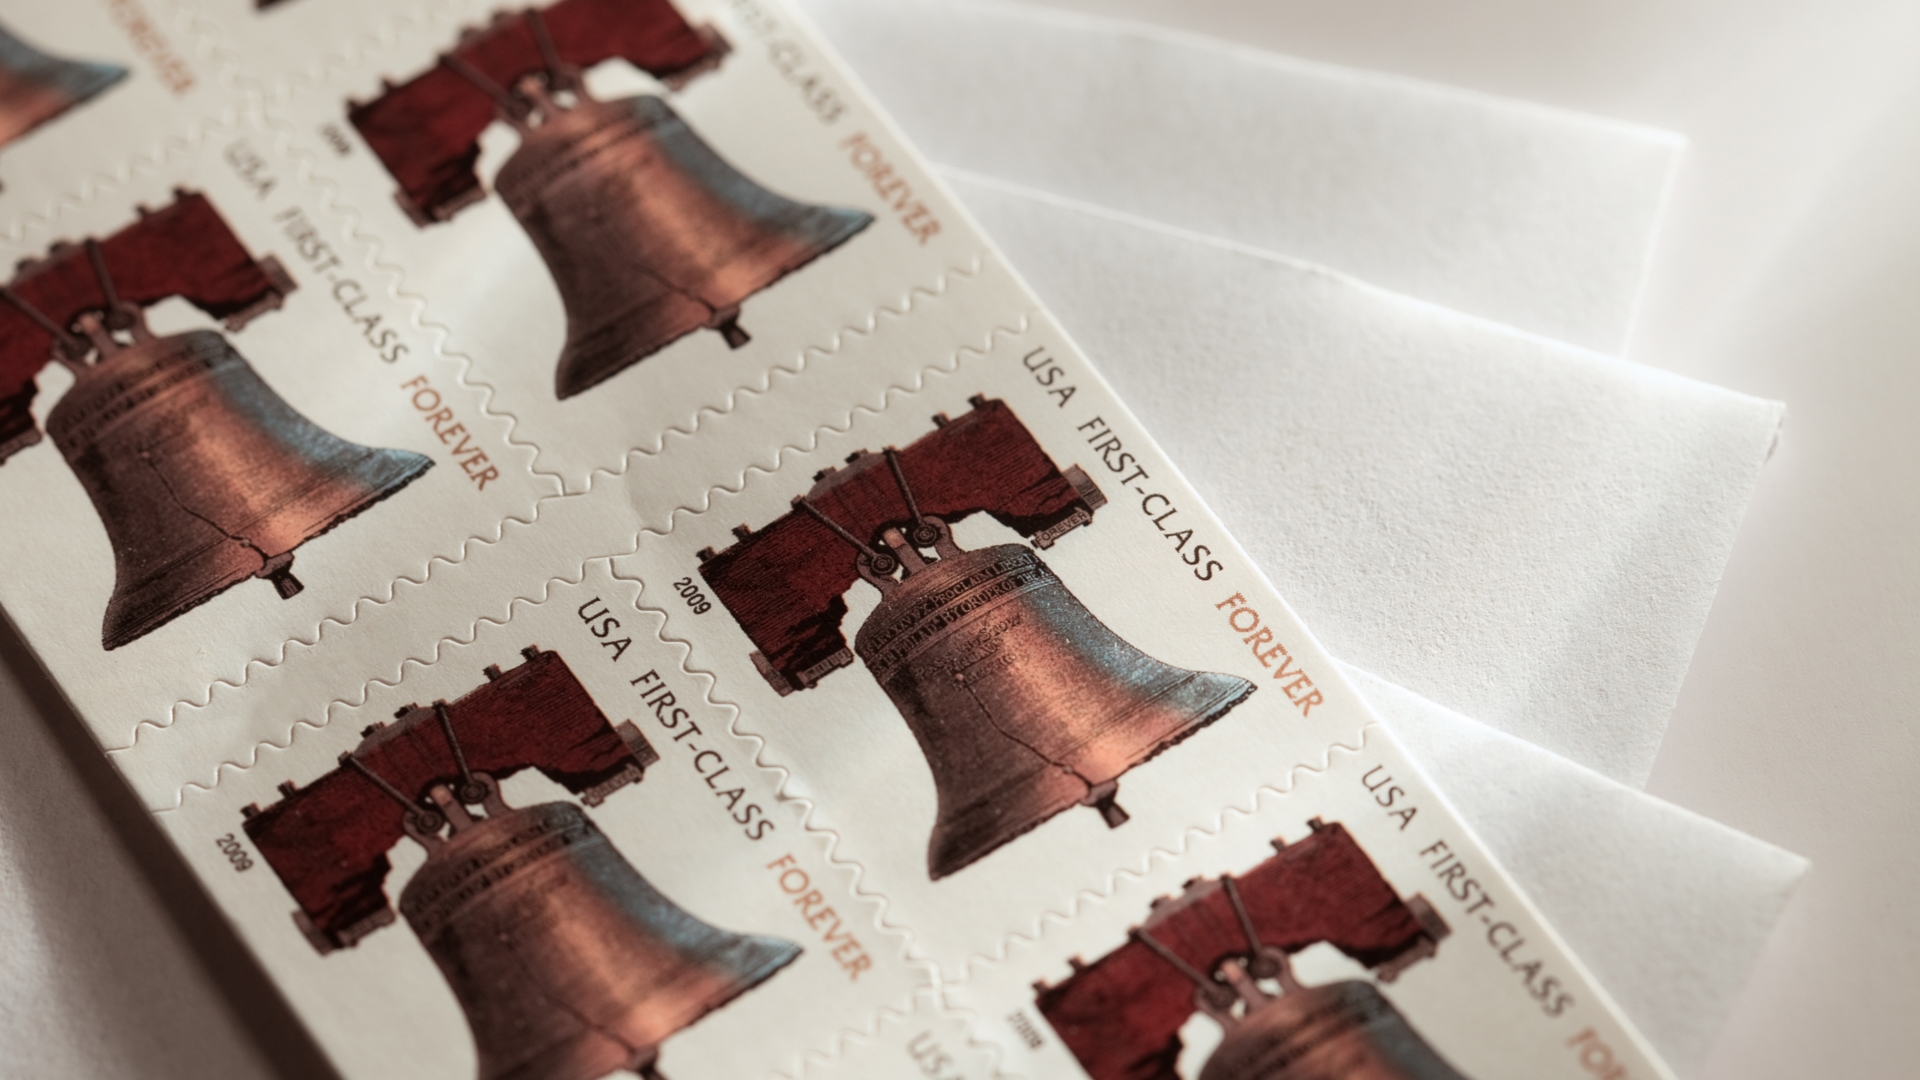 USA USPS US Flag Forever Stamp 60 Stamps, (3 Booklets of 20 Stamps